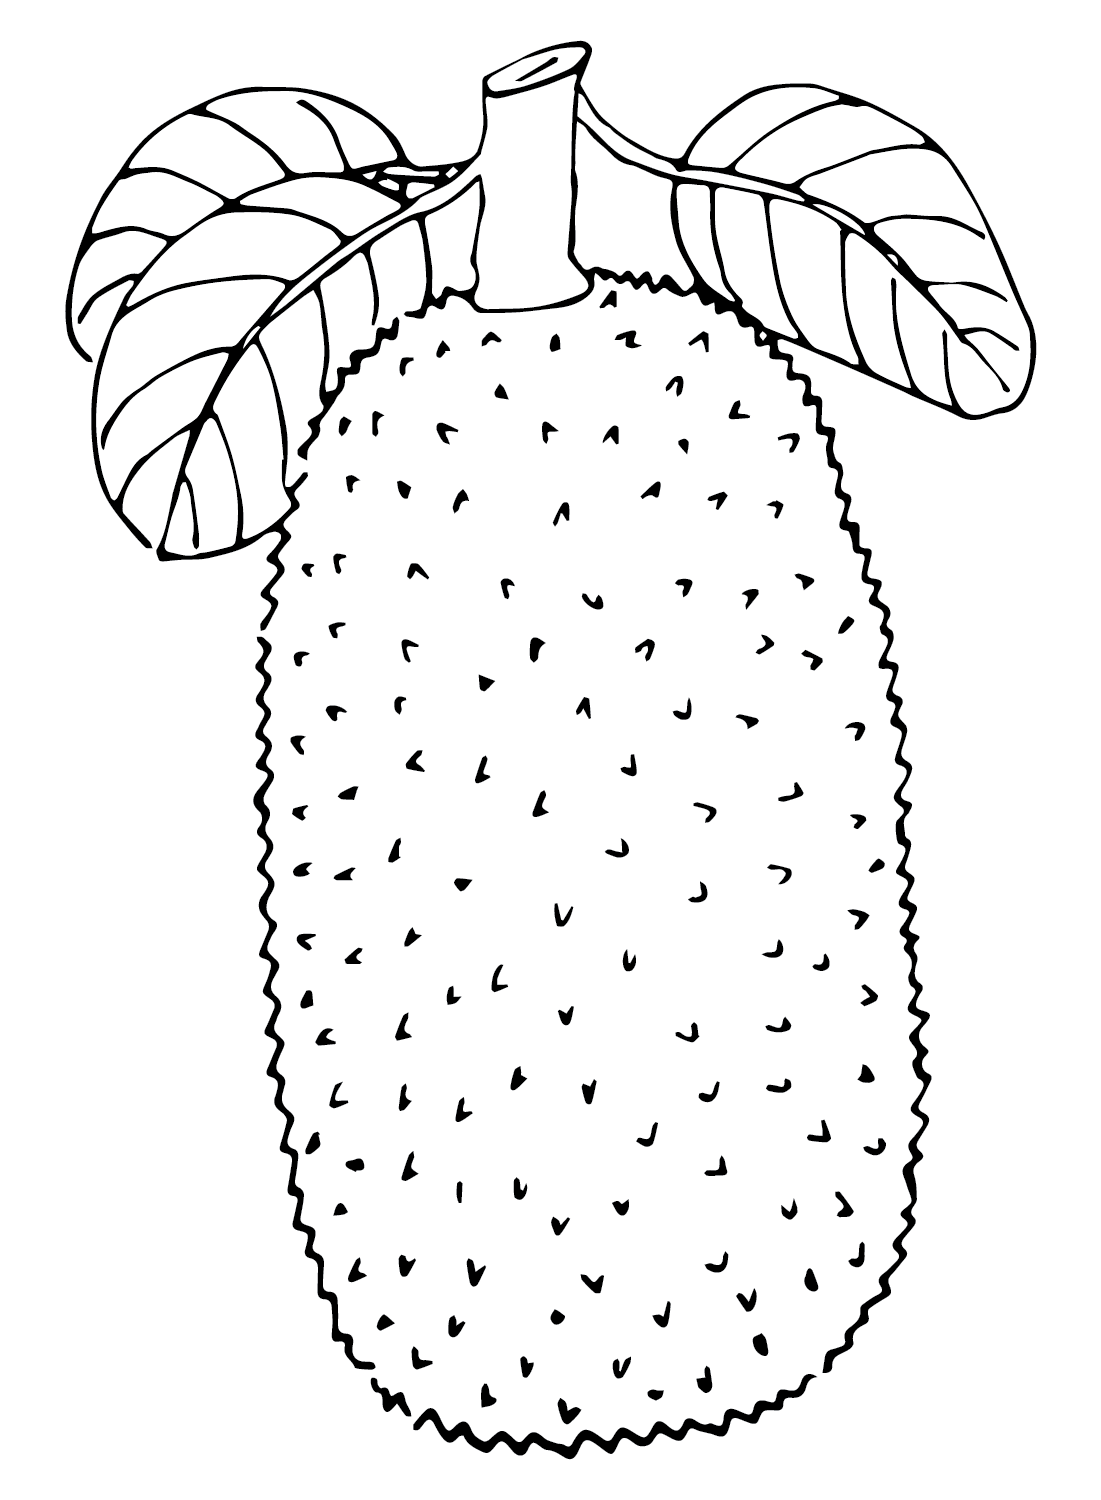 Premium Vector  Hand drawn of ripe jackfruit